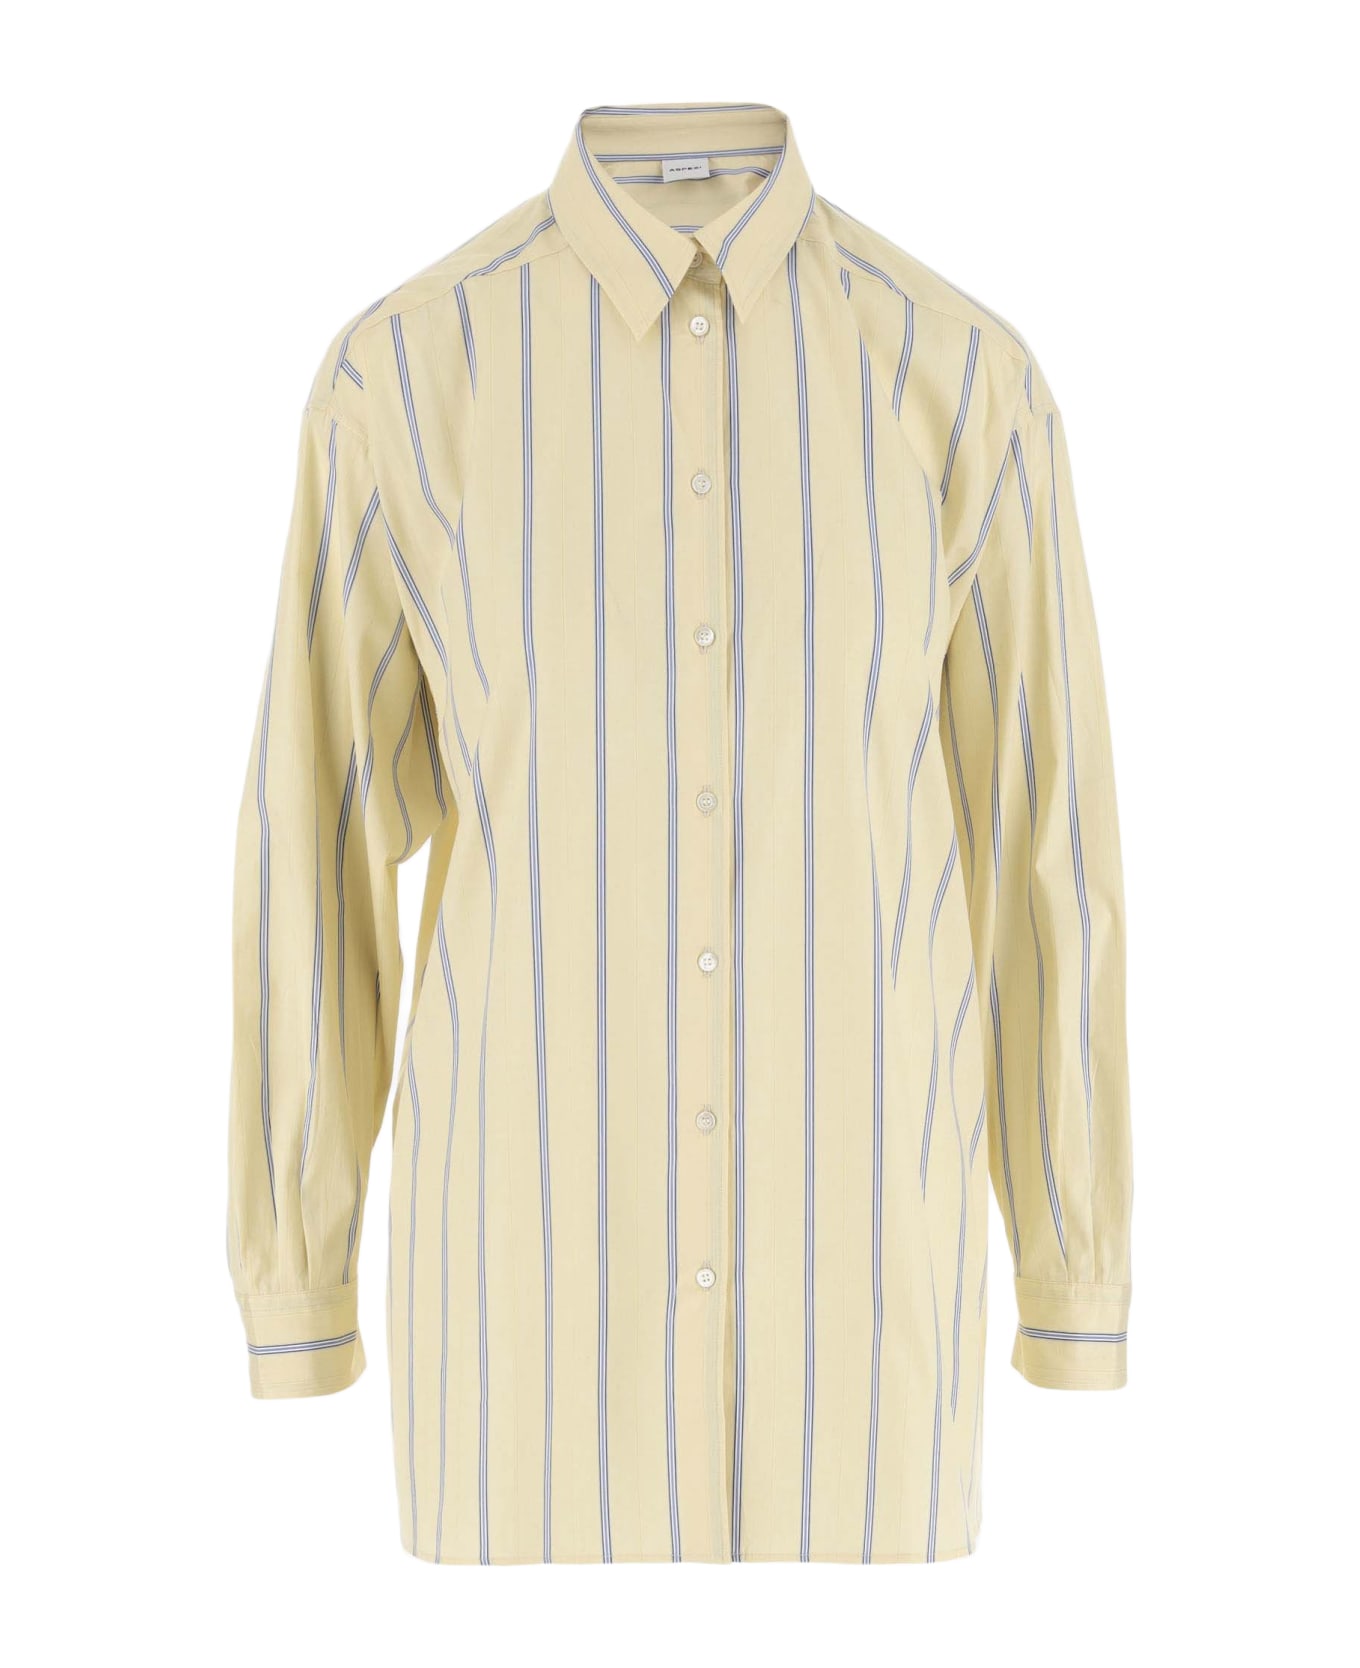 Aspesi Cotton Shirt With Striped Pattern - Yellow シャツ